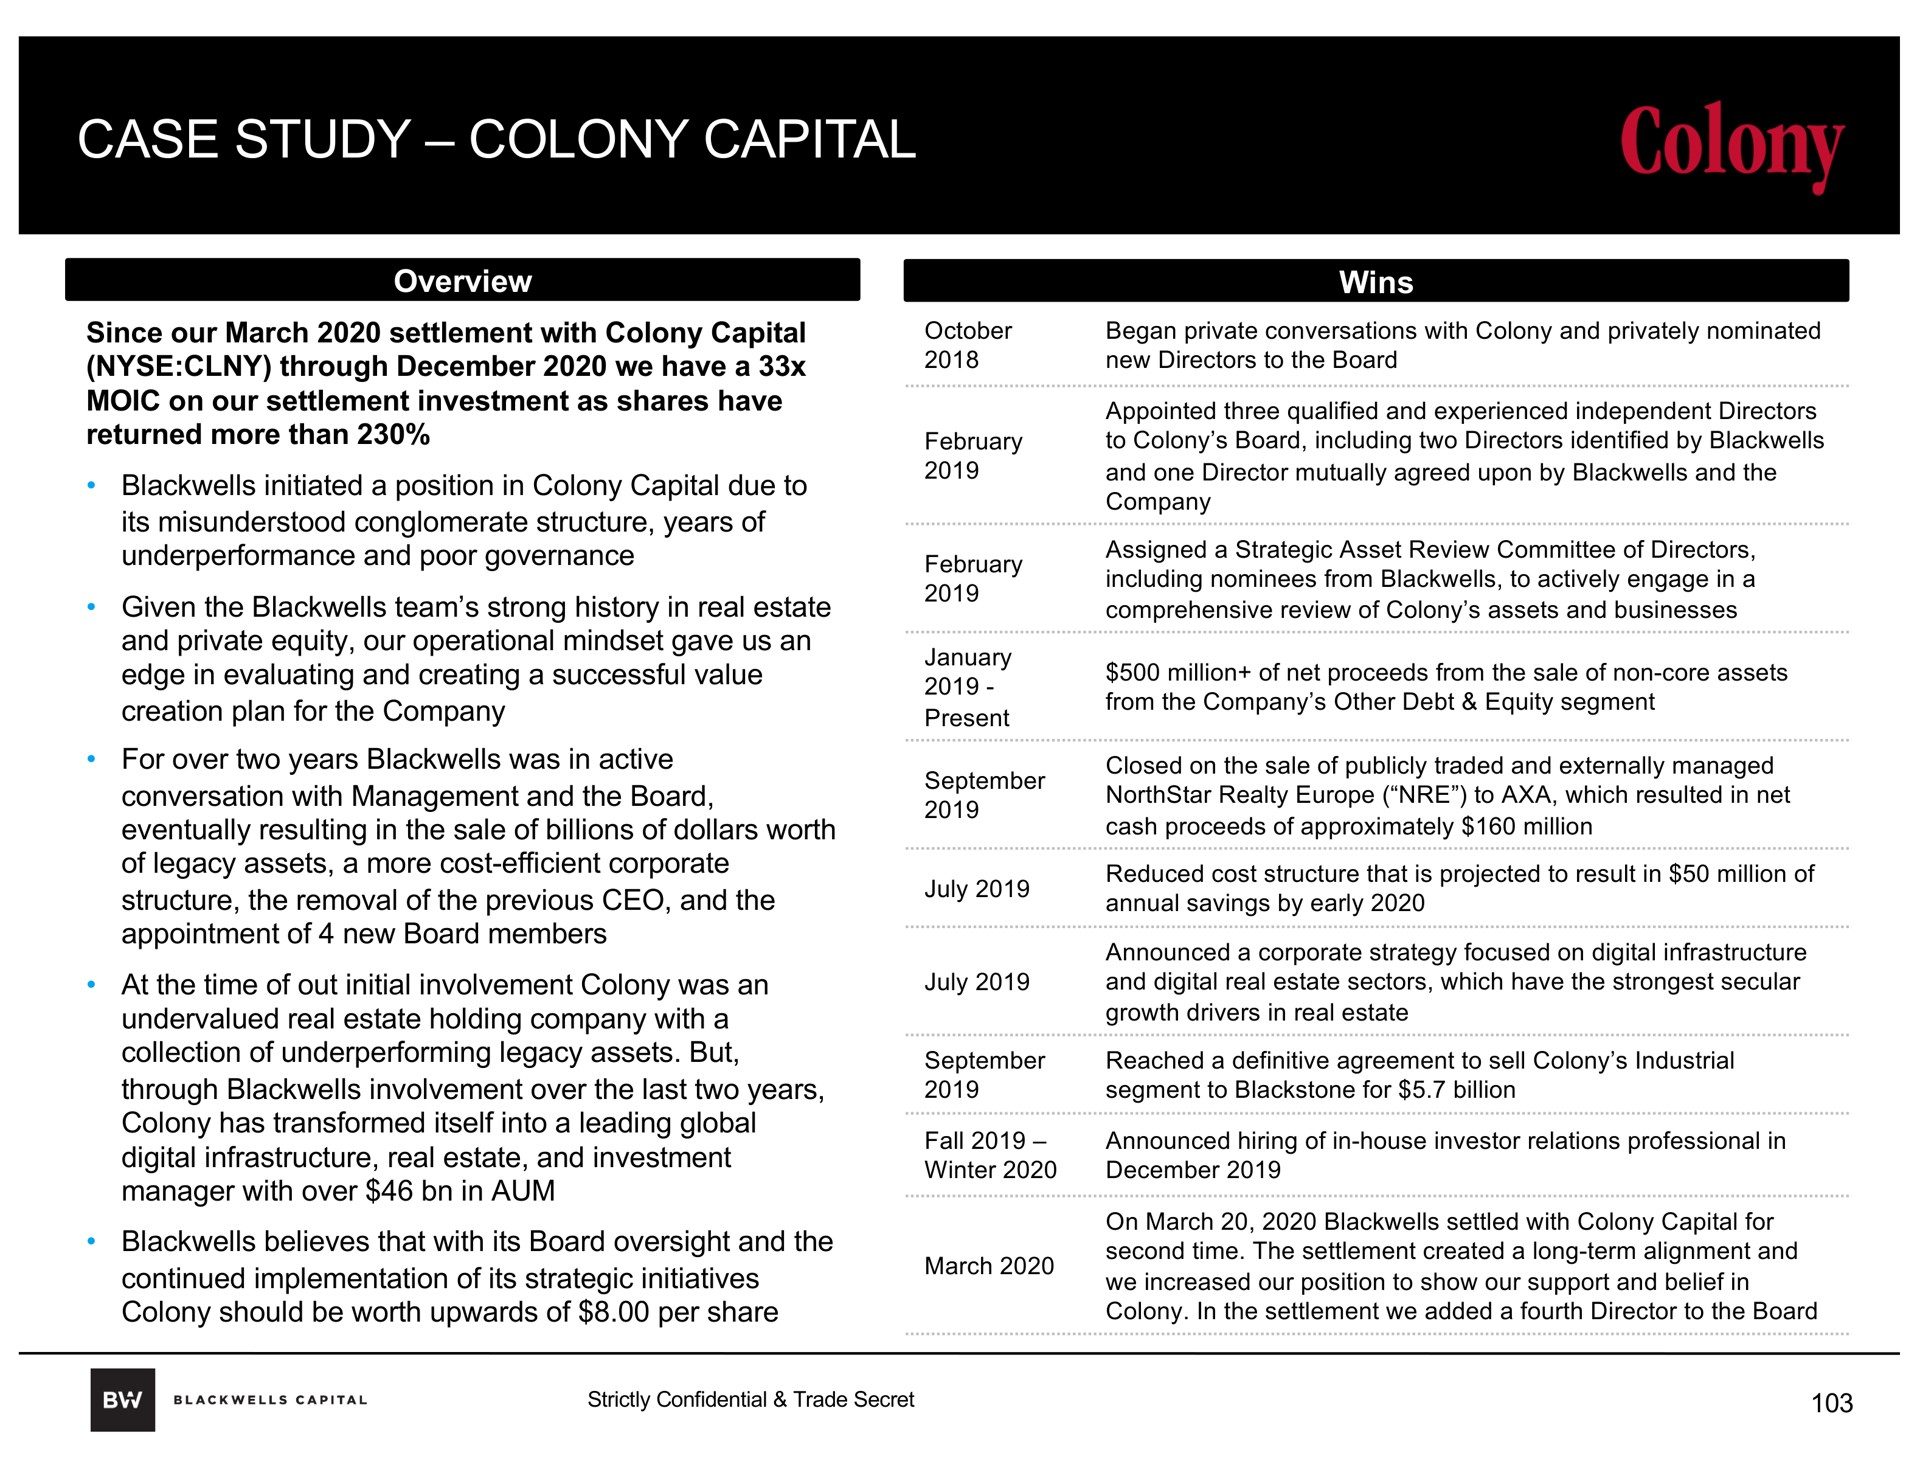 case study colony capital a | Blackwells Capital